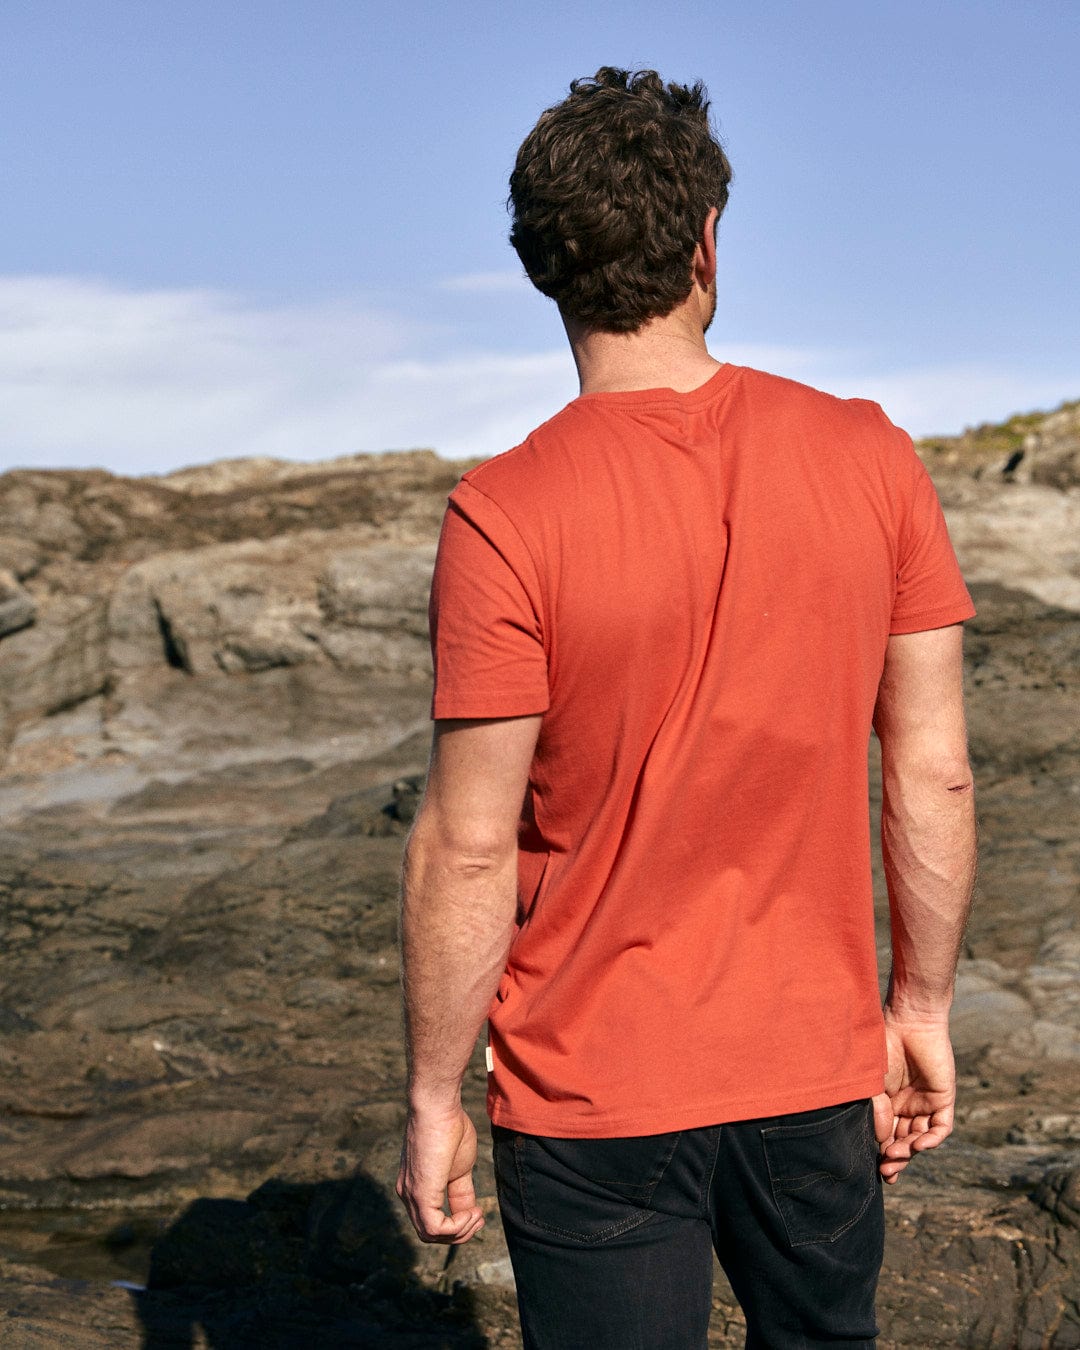 A man wearing a stylish Saltrock Wood Carve Logo - Mens Short Sleeve T-Shirt - Red standing on a rocky beach.